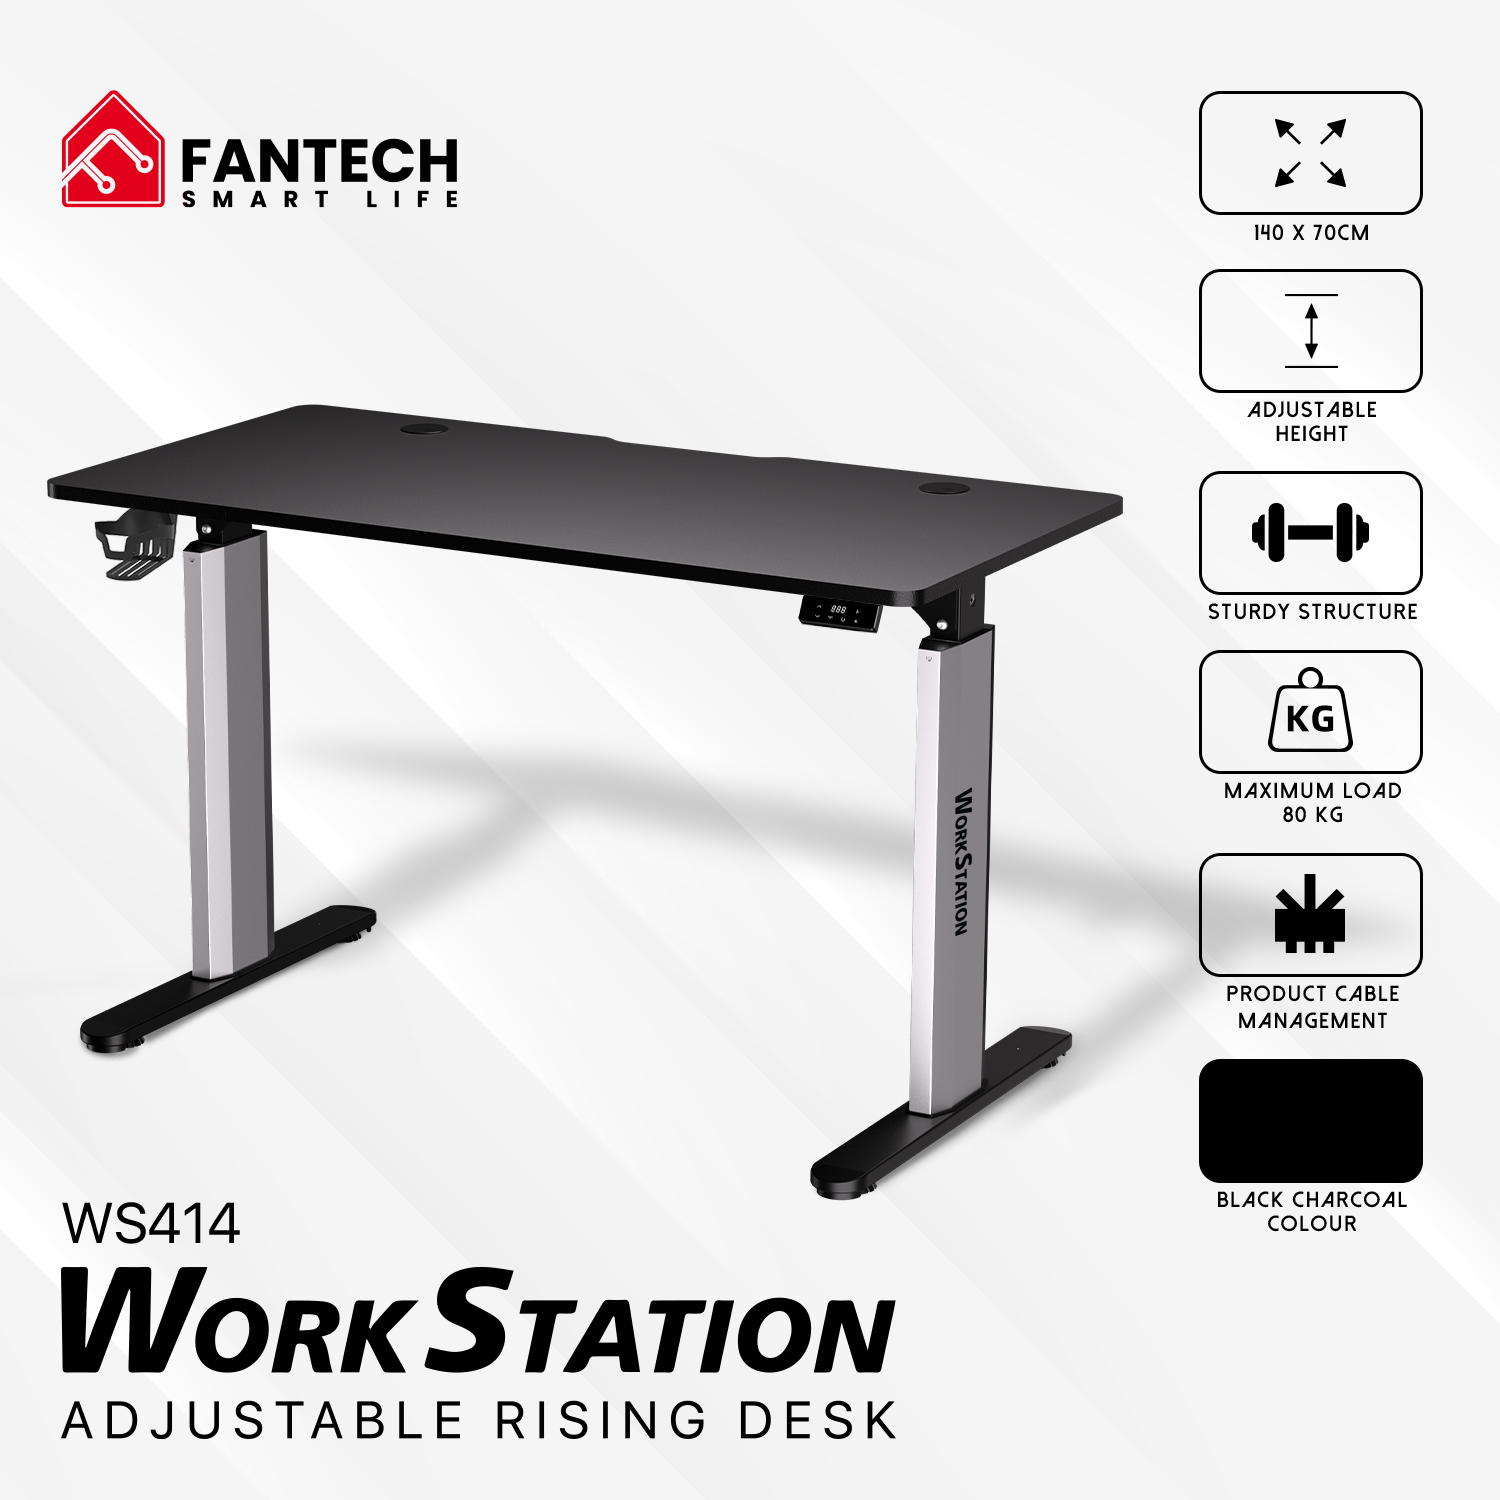 FANTECH WORKSTATION WS414